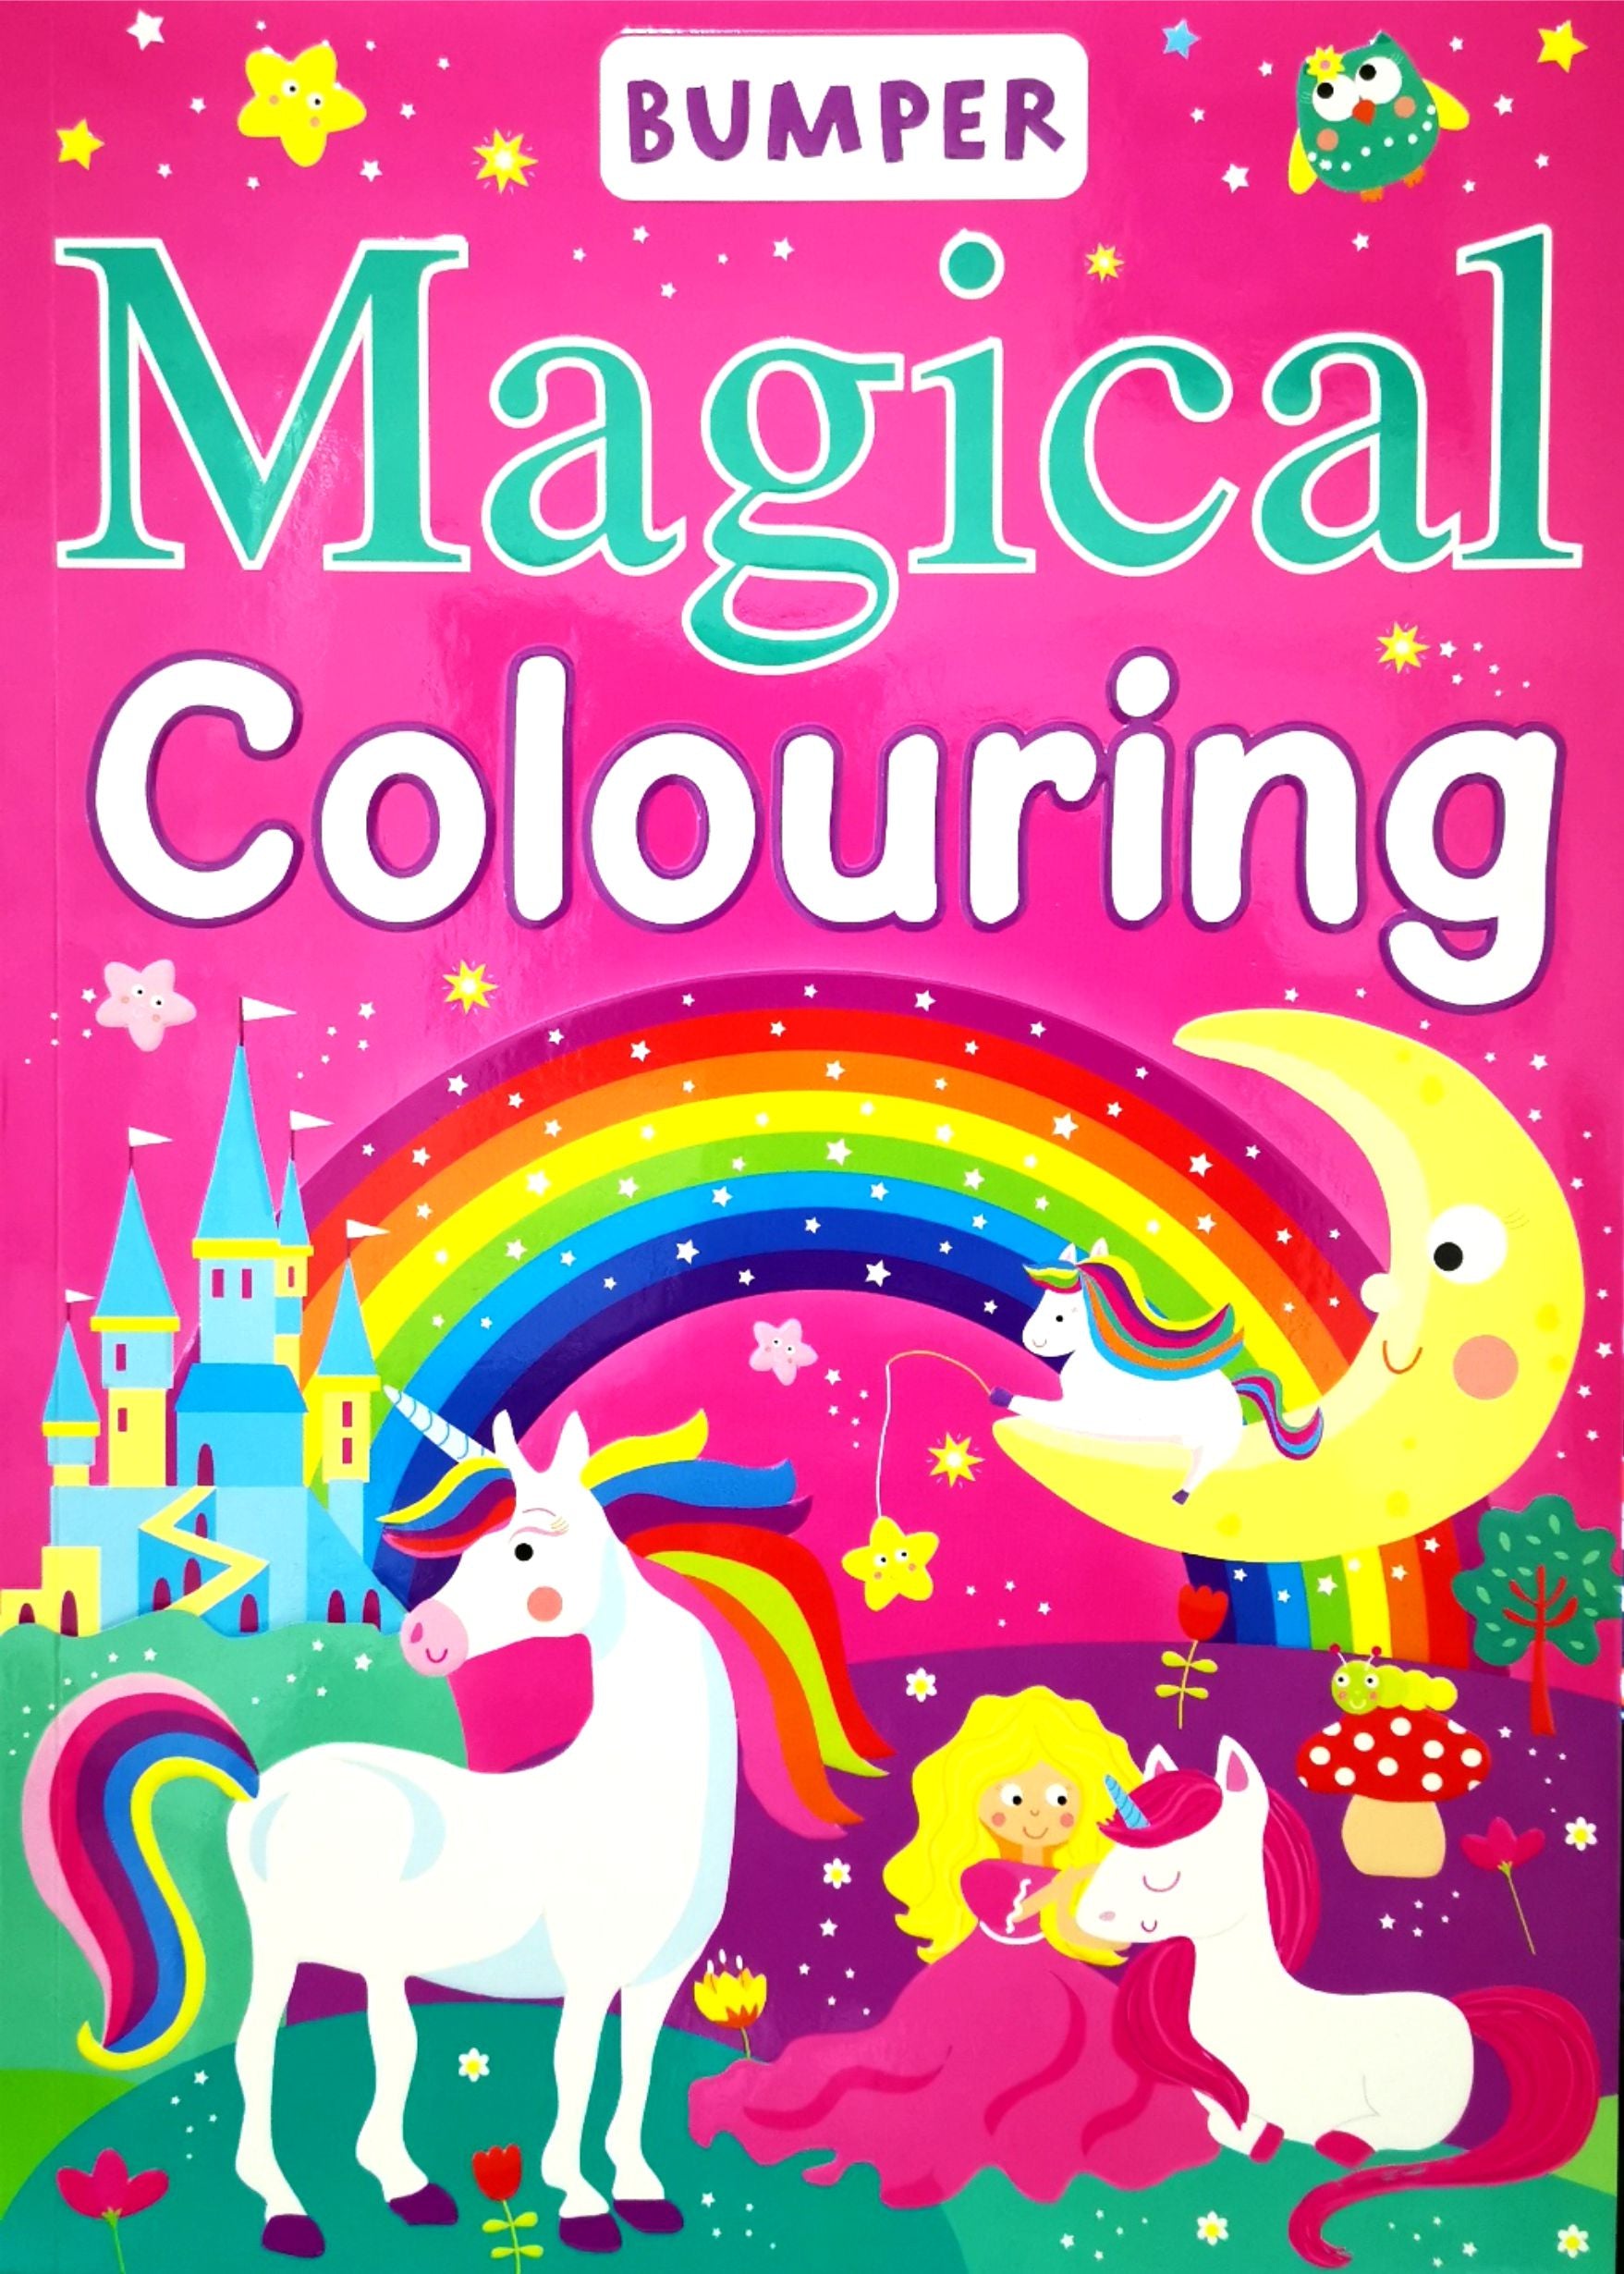 Bumper Magical Colouring